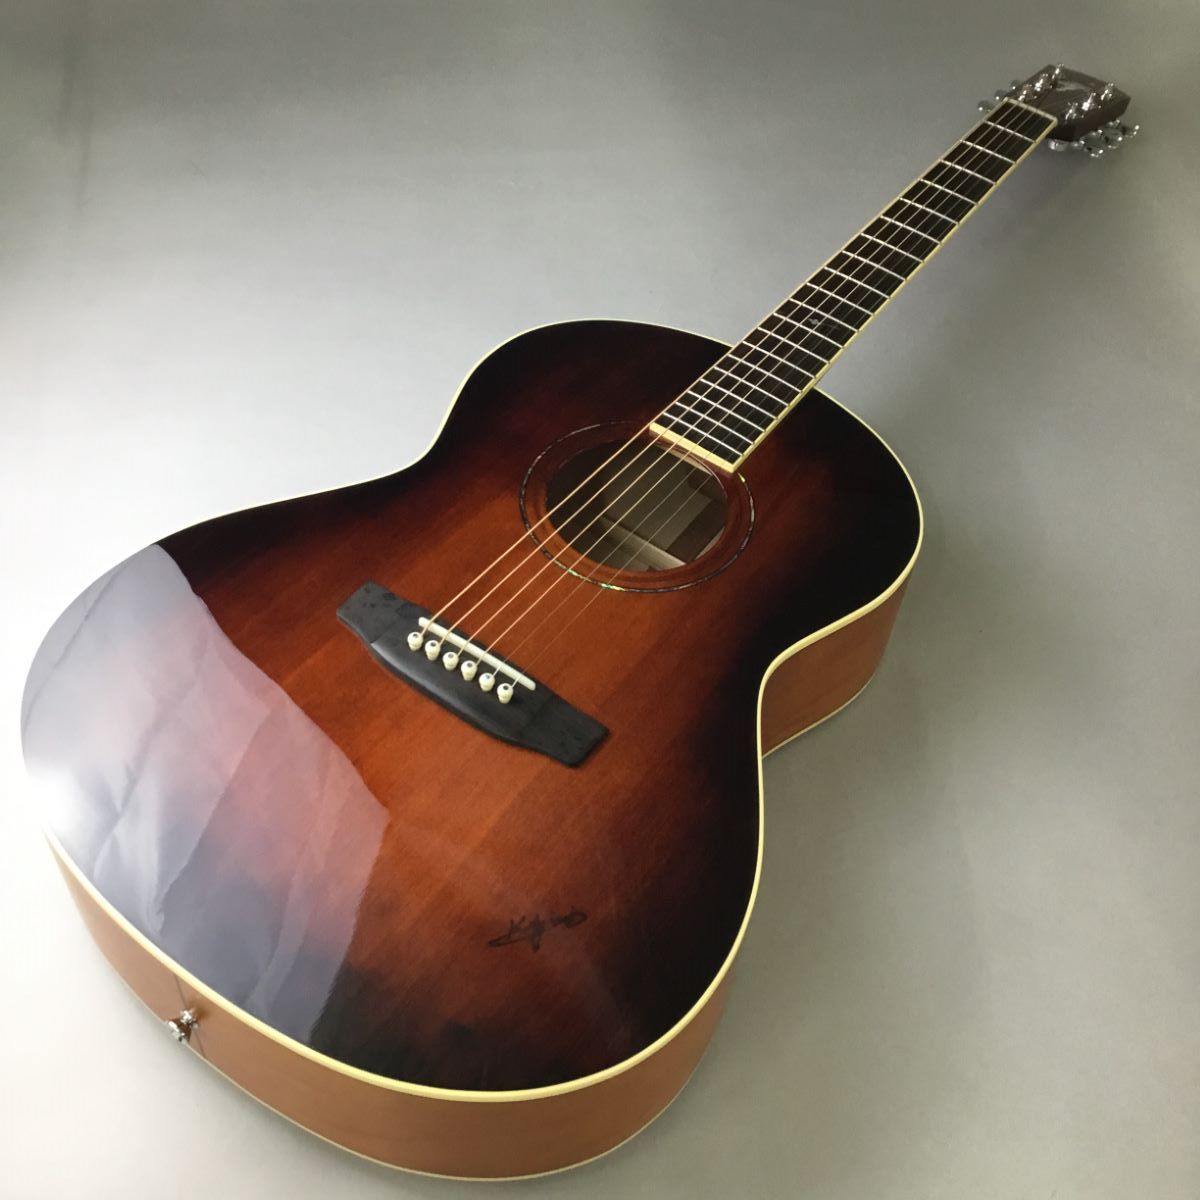 K.yairi sl-ma1 アコースティックギター - アコースティックギター